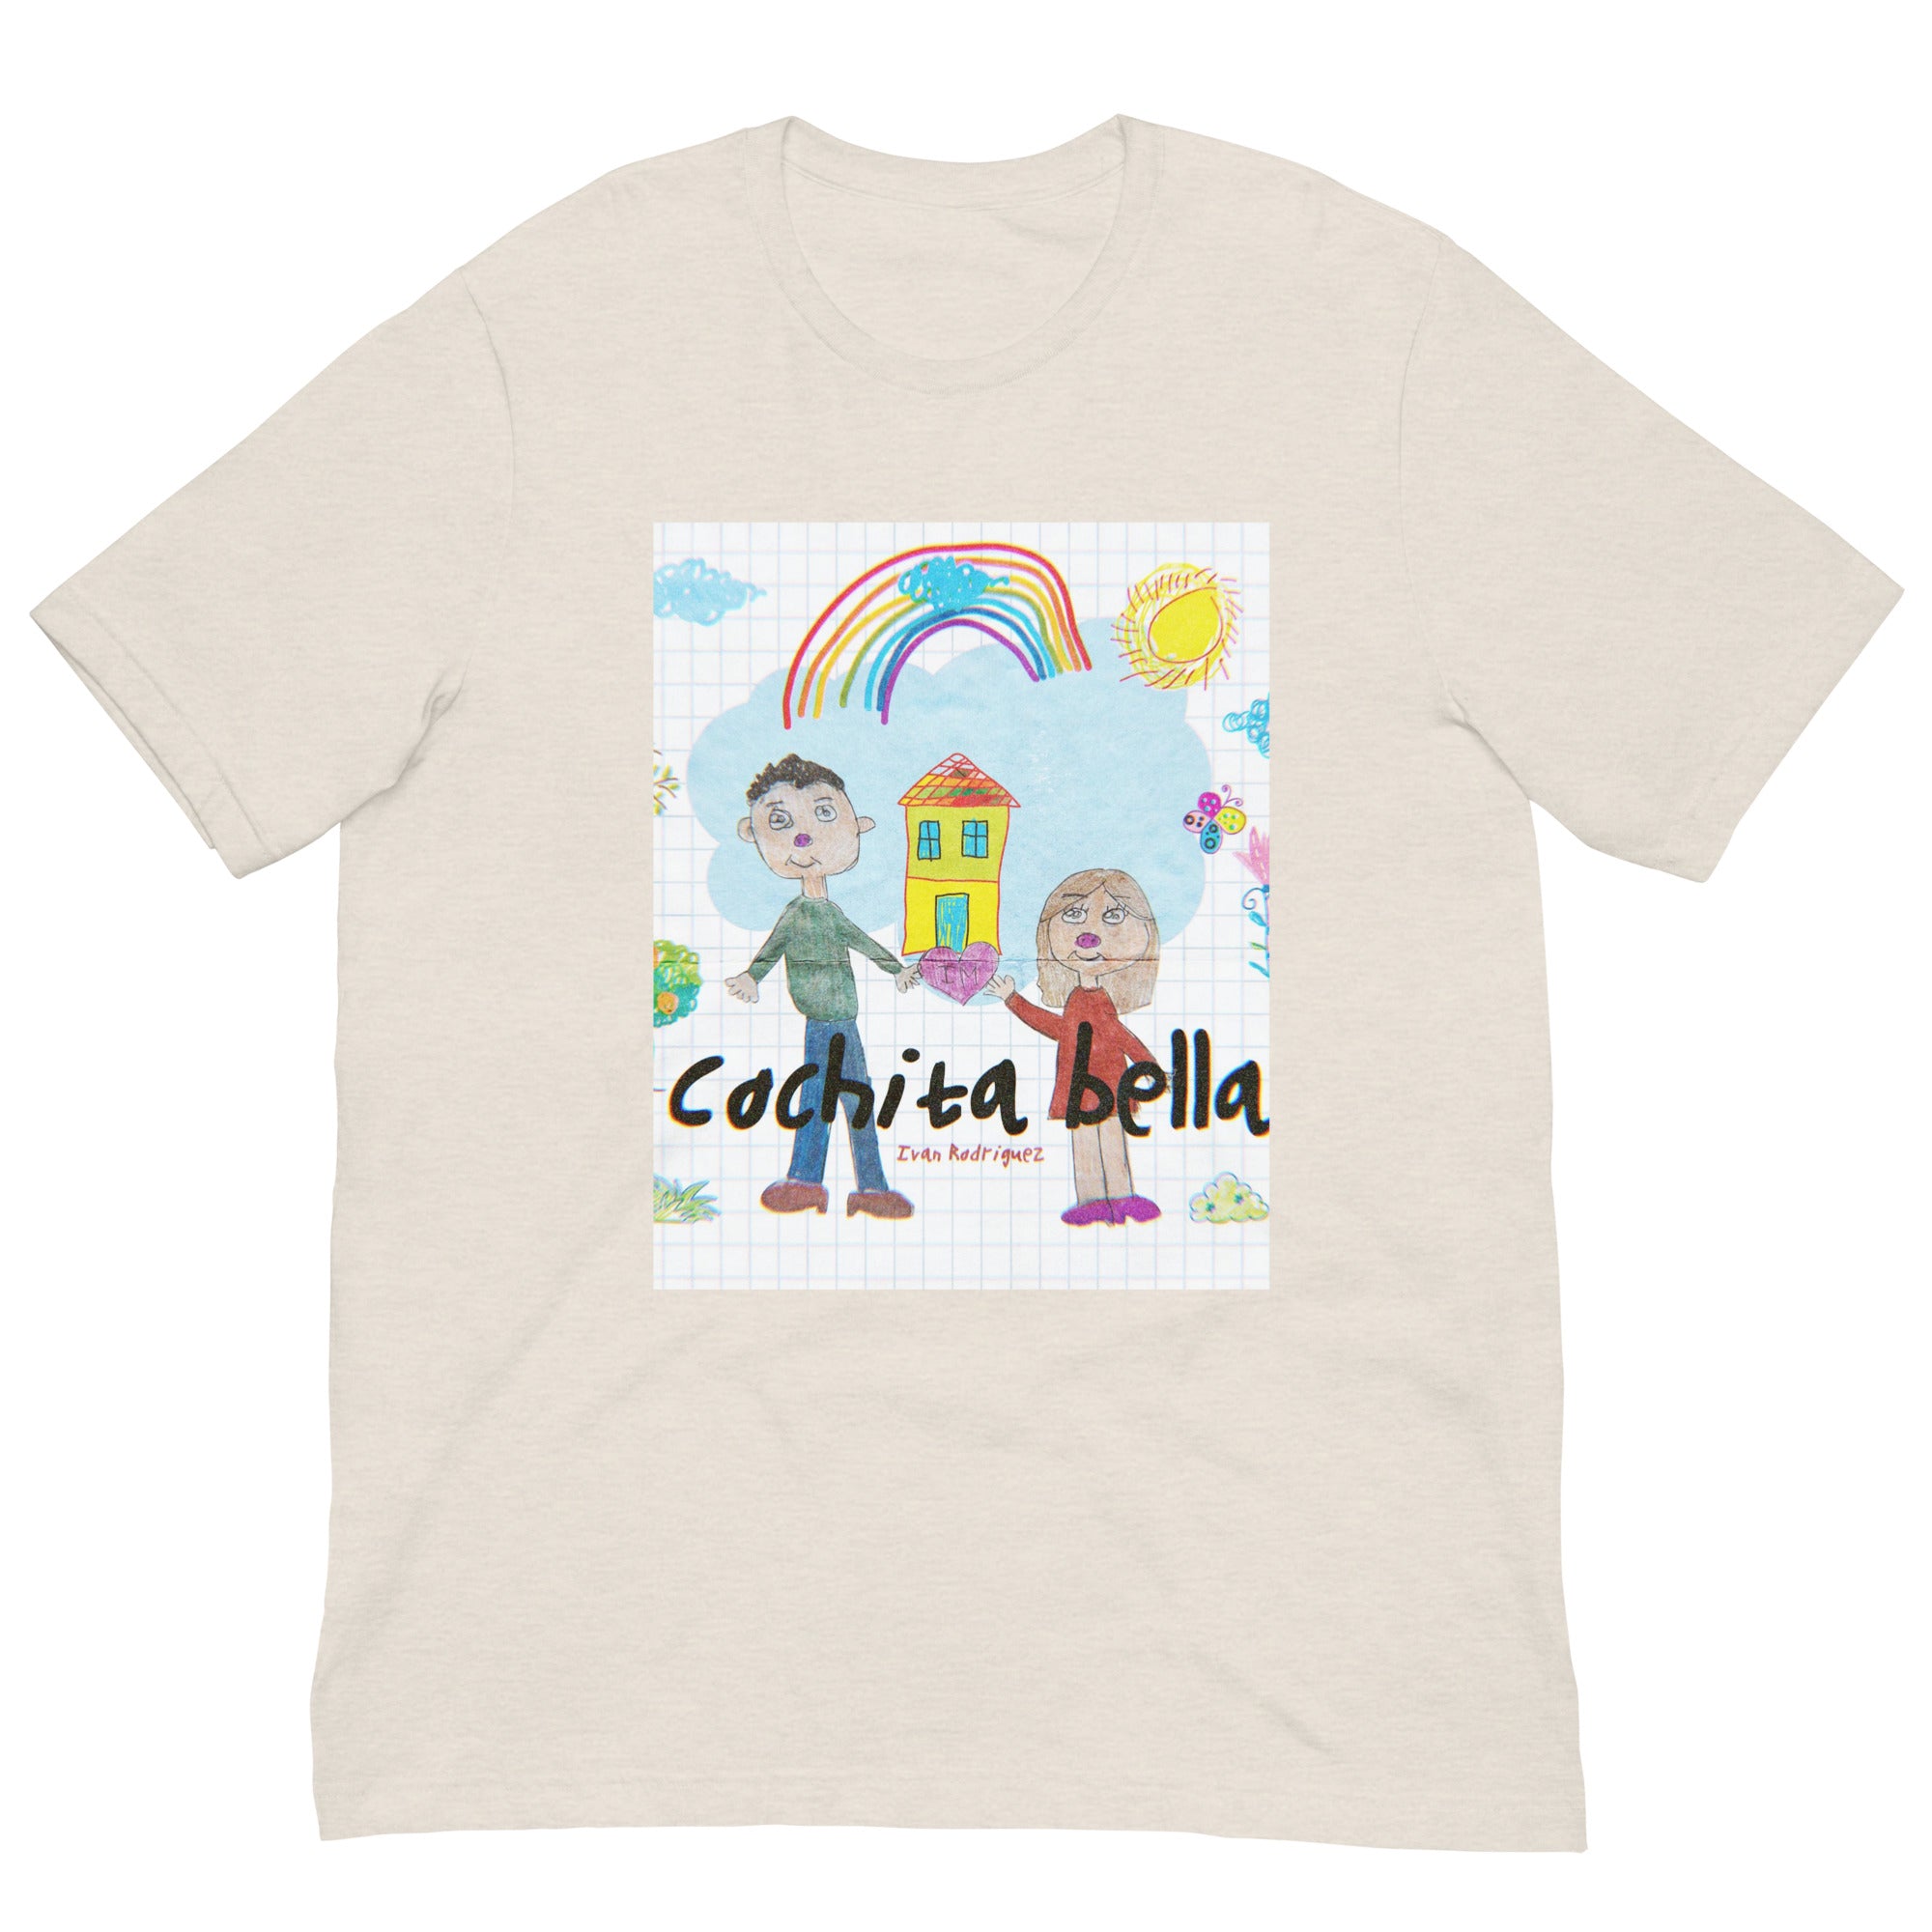 Ivan Rodriguez - "Cochita Bella" - Unisex t-shirt